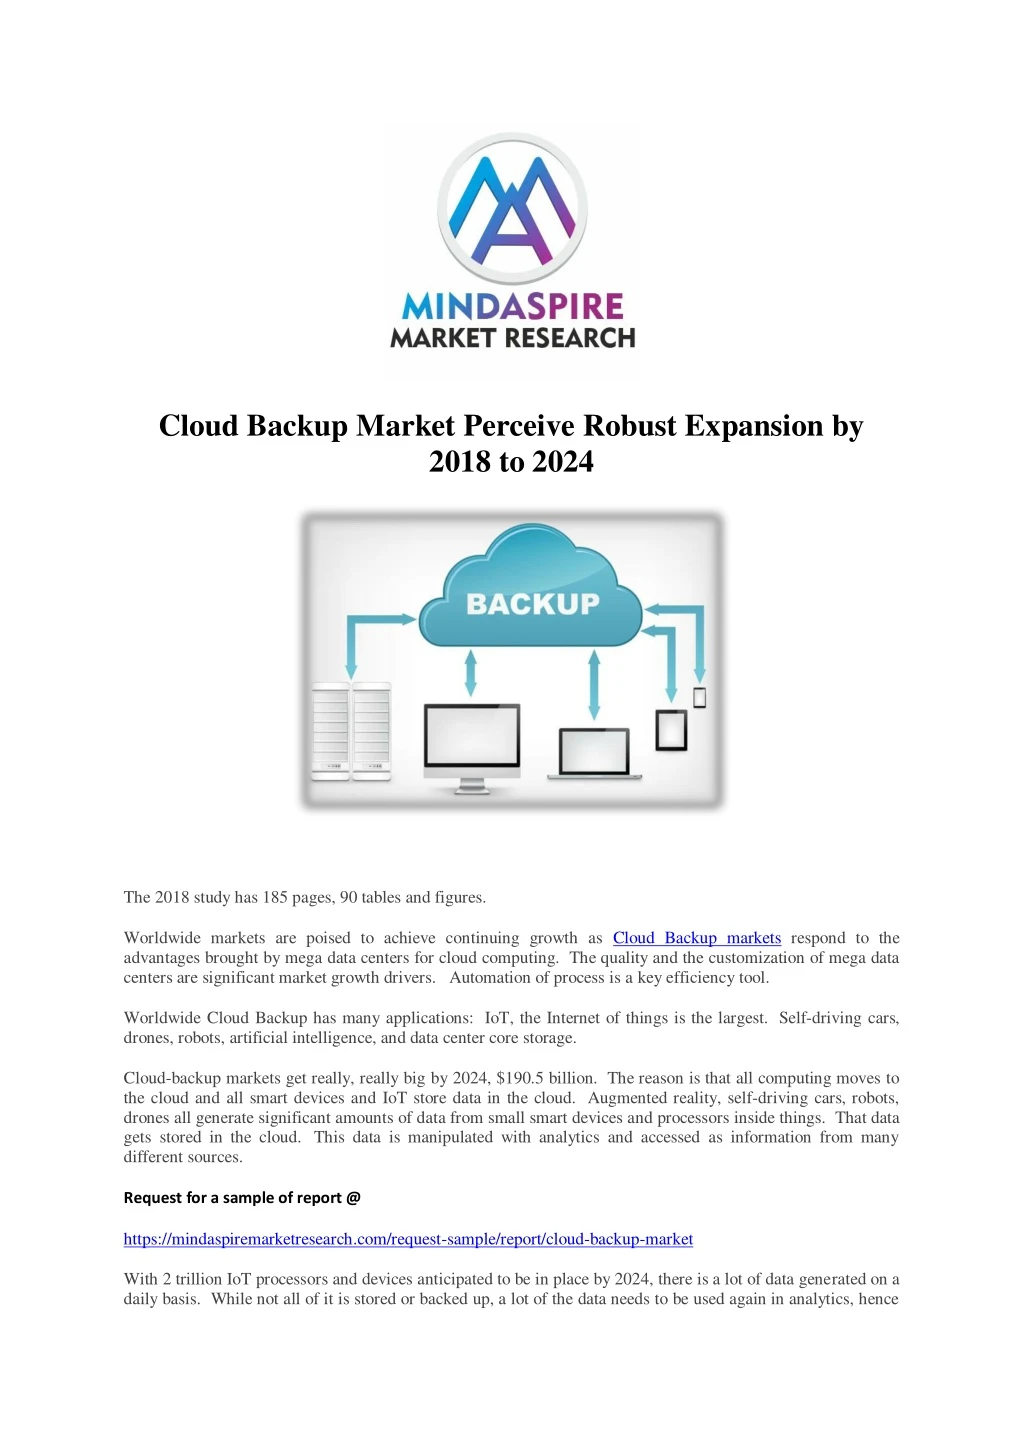 cloud backup market perceive robust expansion